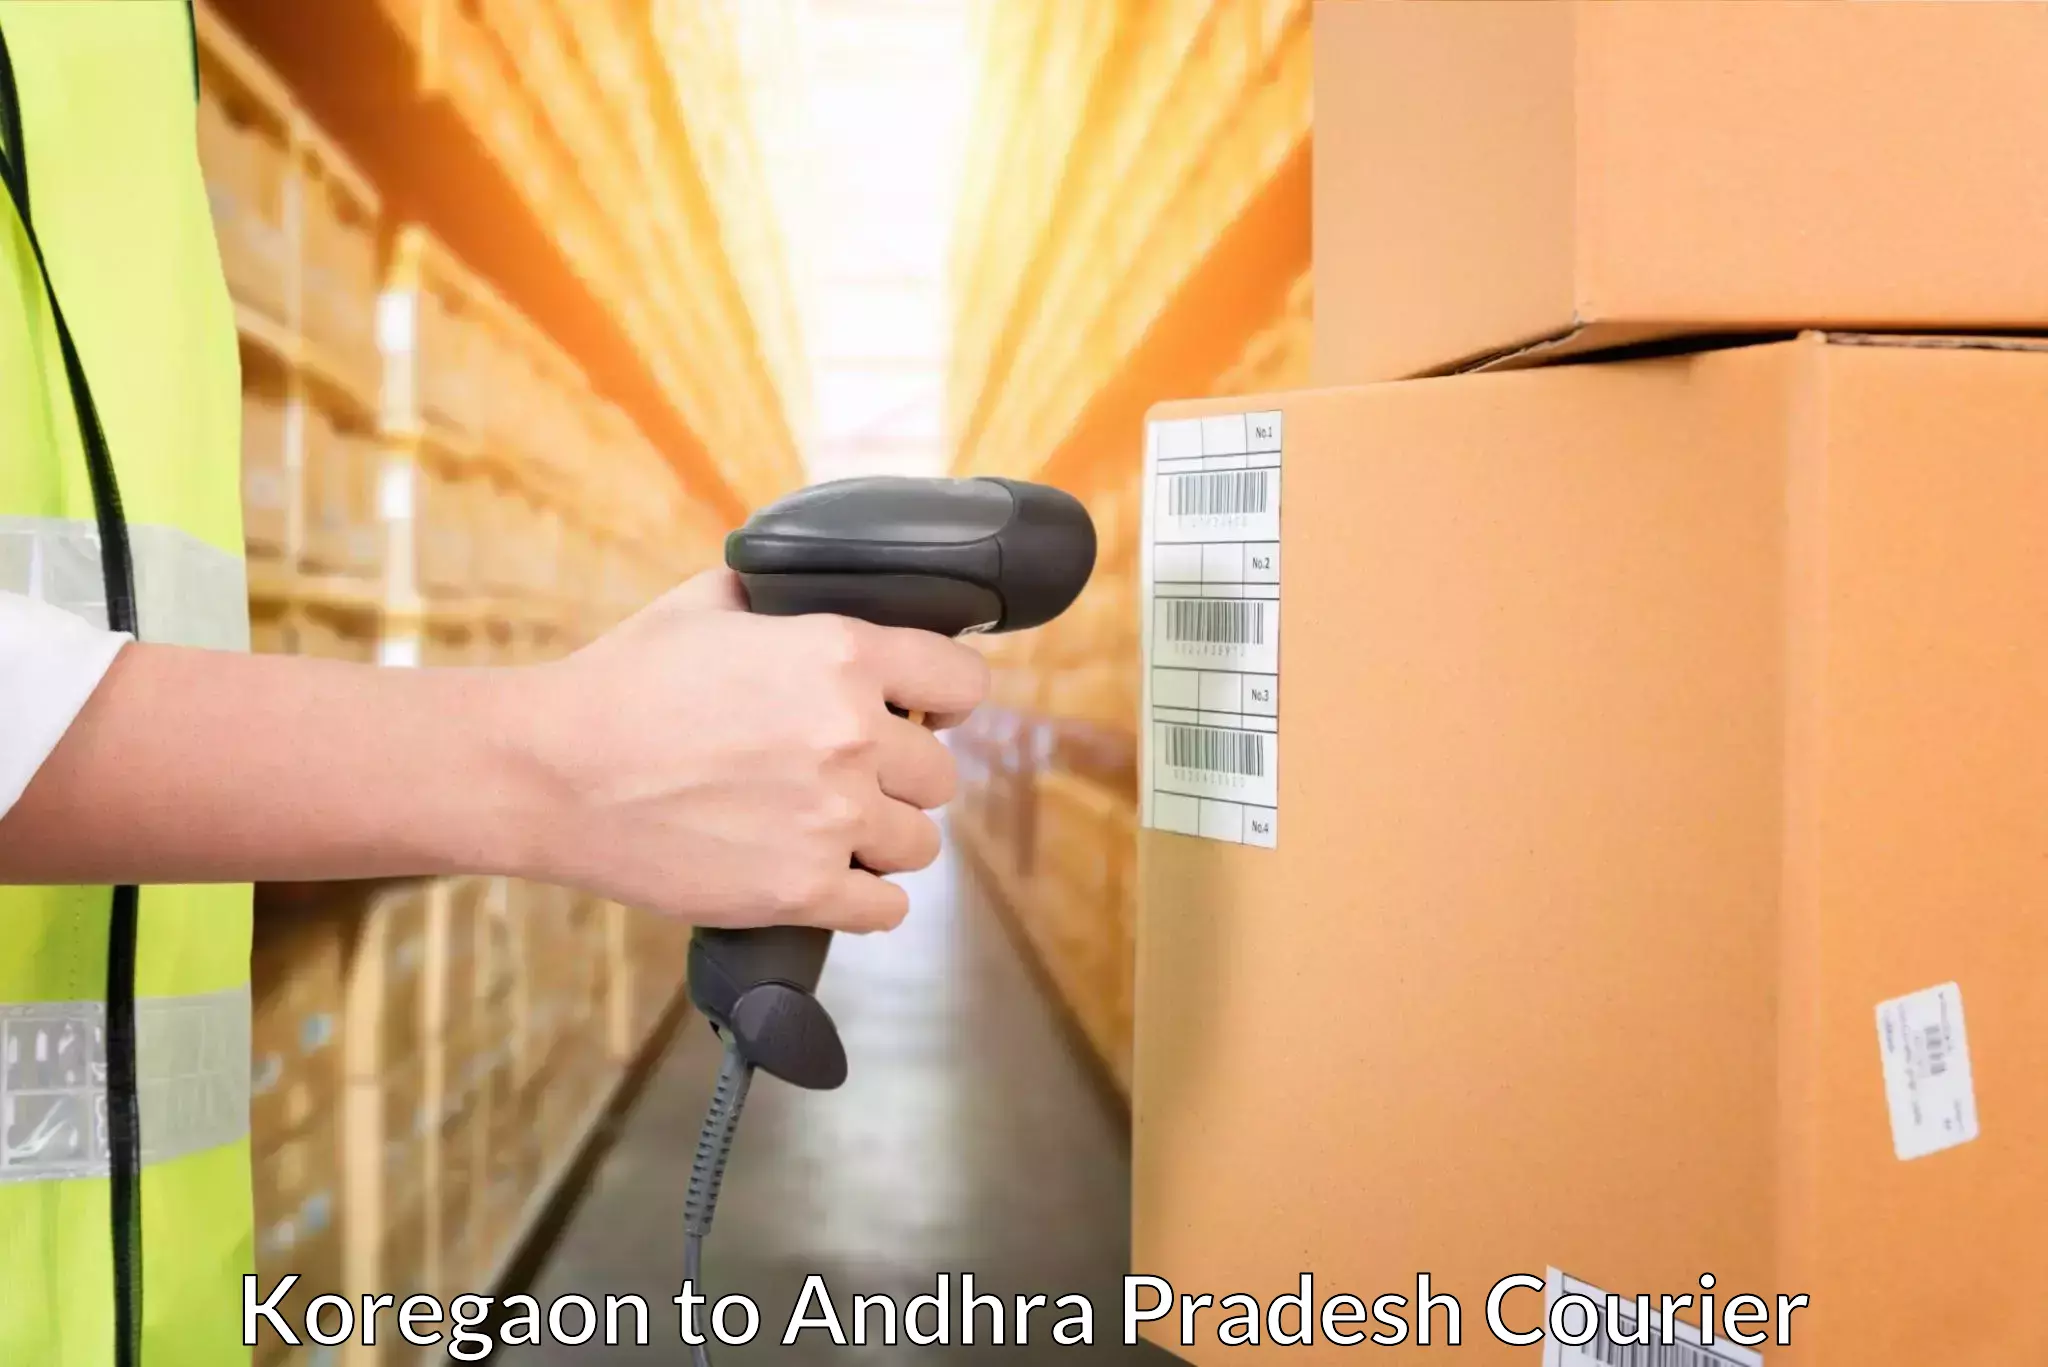 Custom courier packaging Koregaon to Visakhapatnam Port